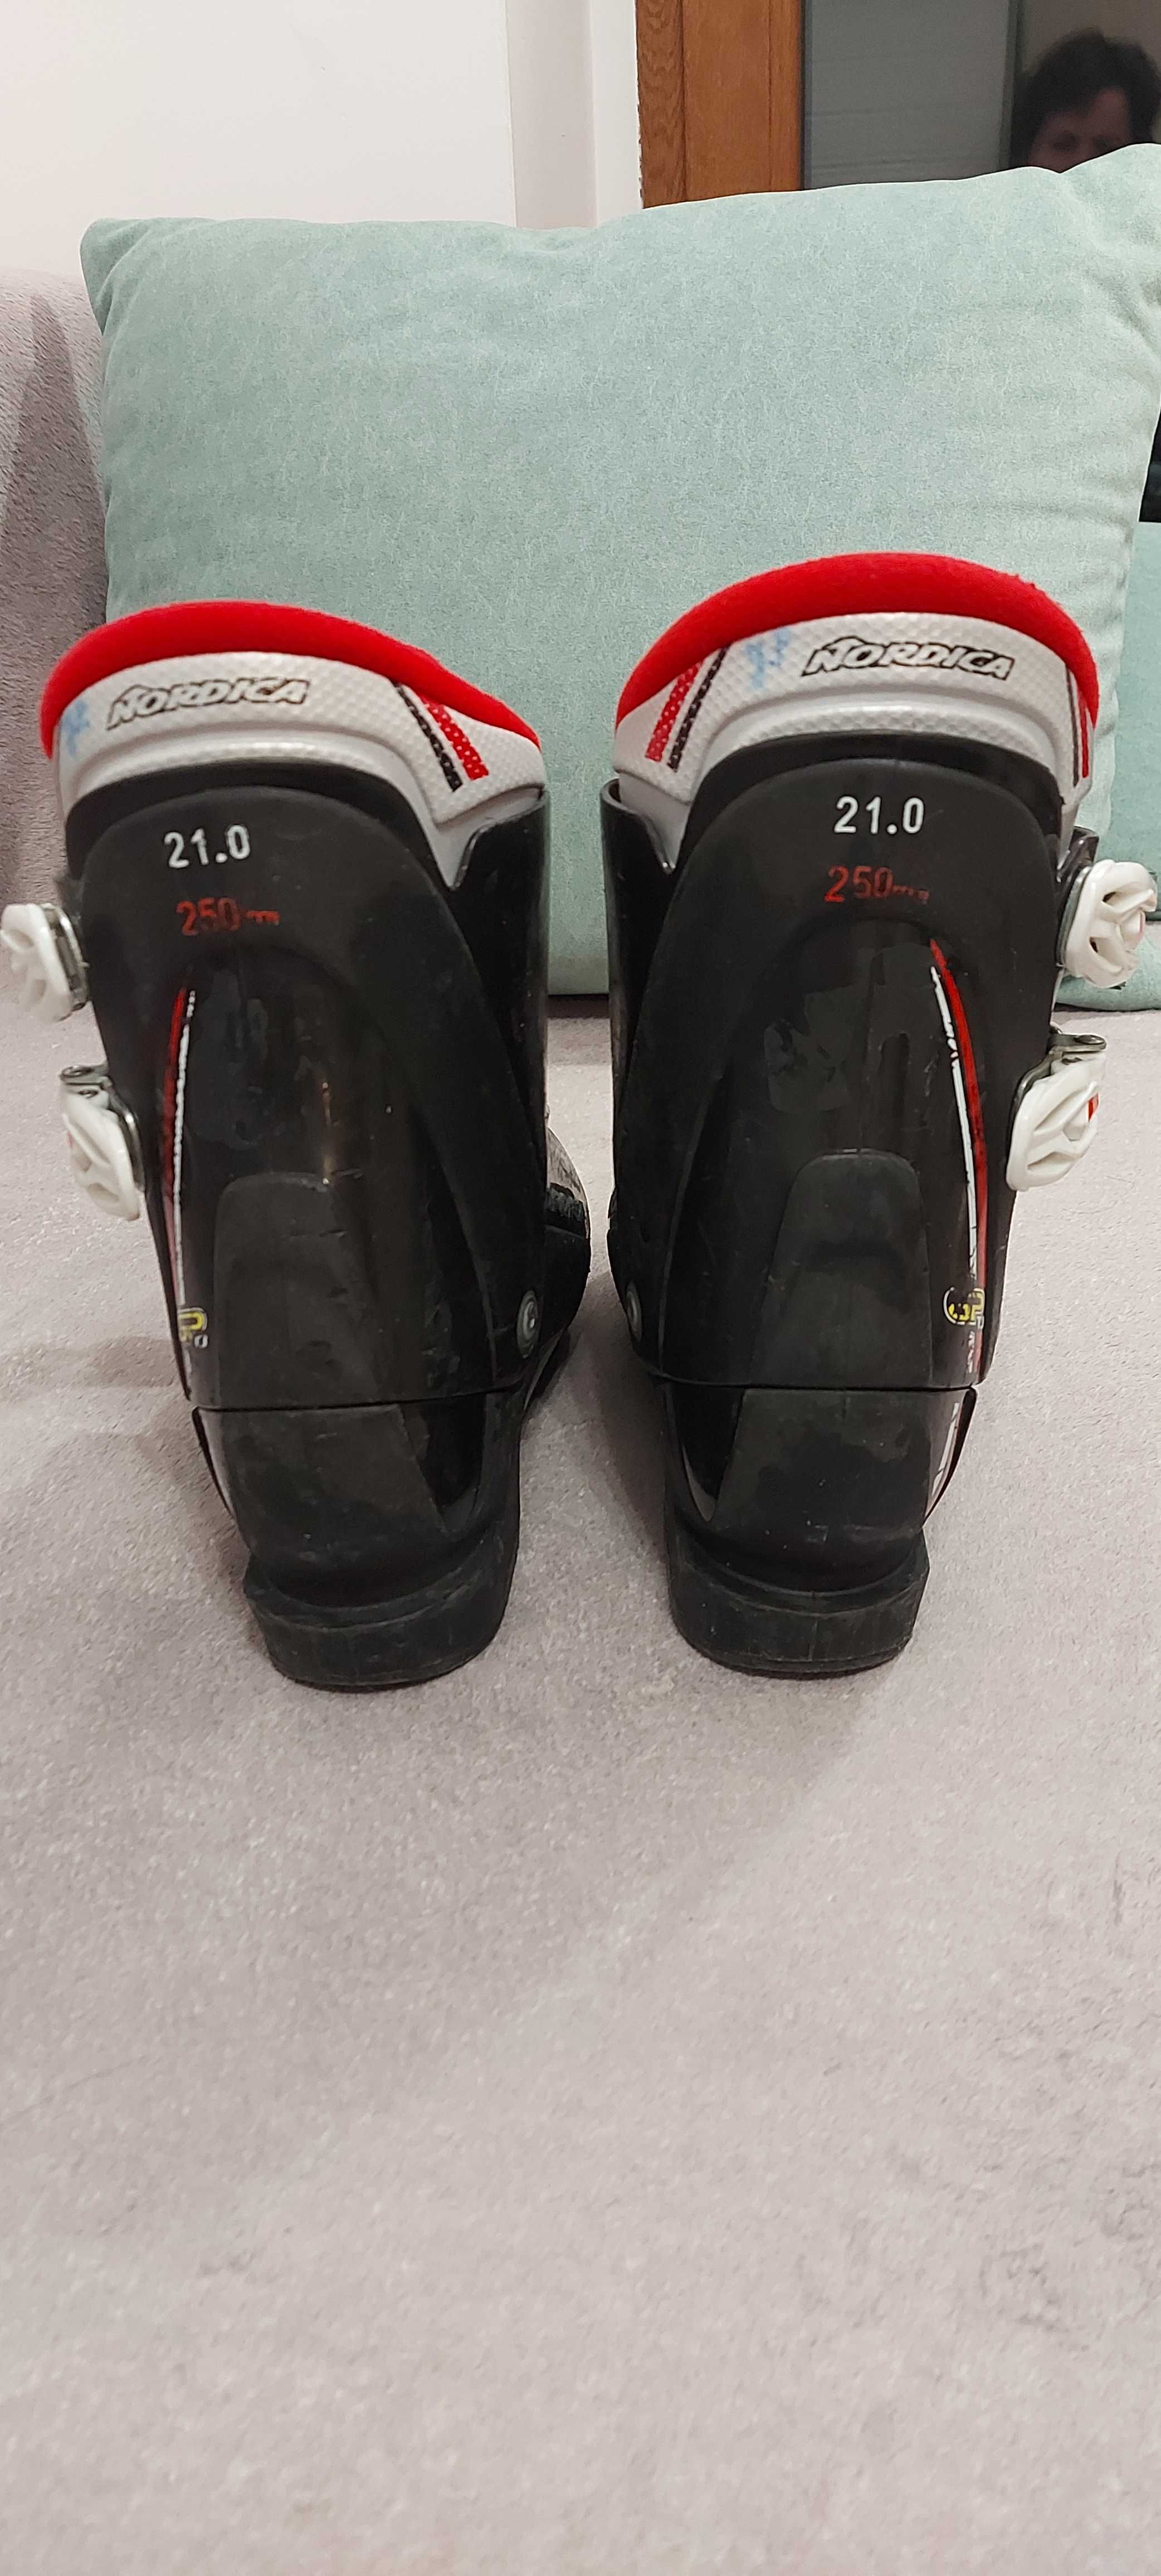 buty narciarskie obuwie nordica